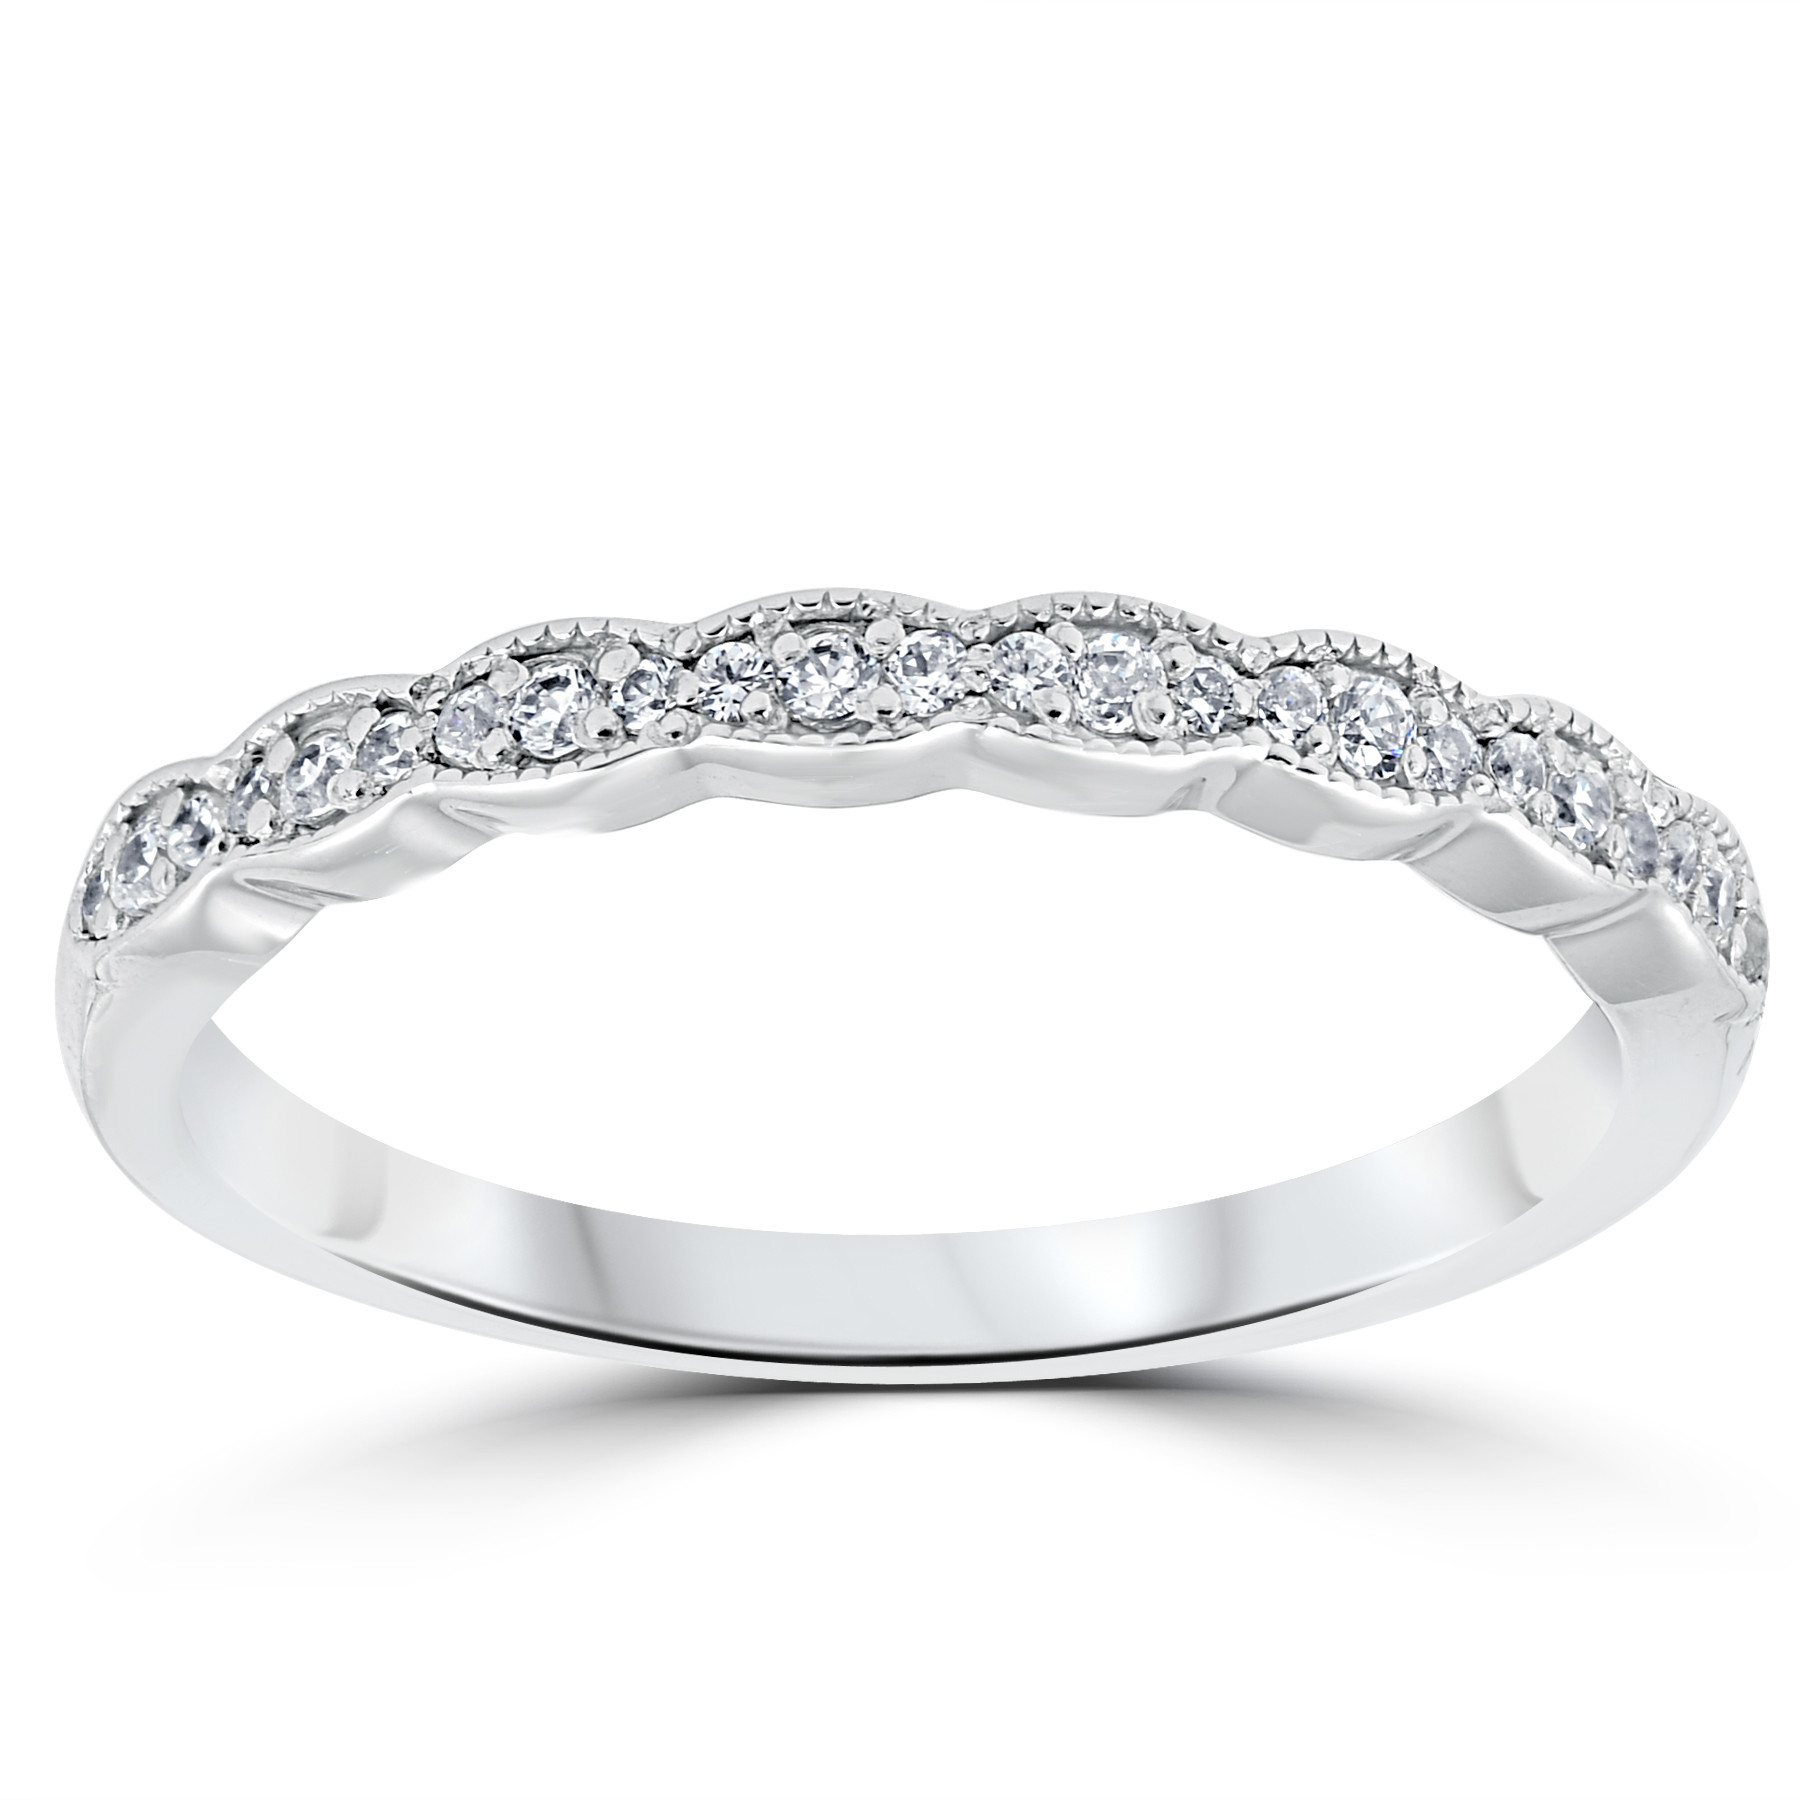 Womens Diamond Wedding Rings
 1 5 cttw Diamond Stackable Womens Wedding Ring 14k White Gold